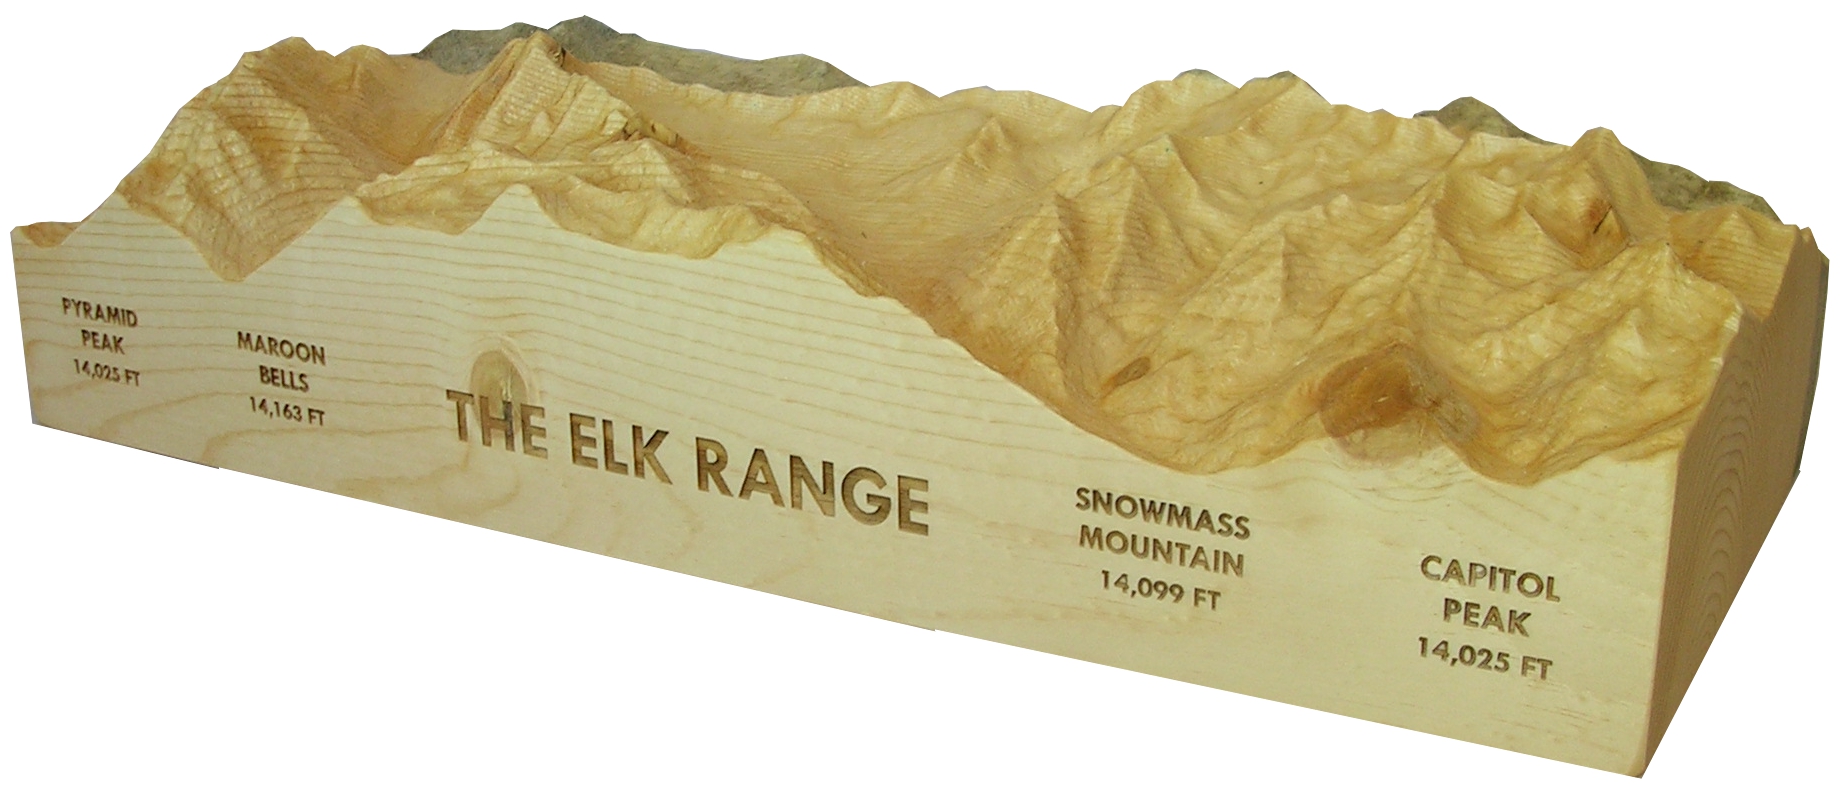 Elk-Range-Carving-Gift.jpg